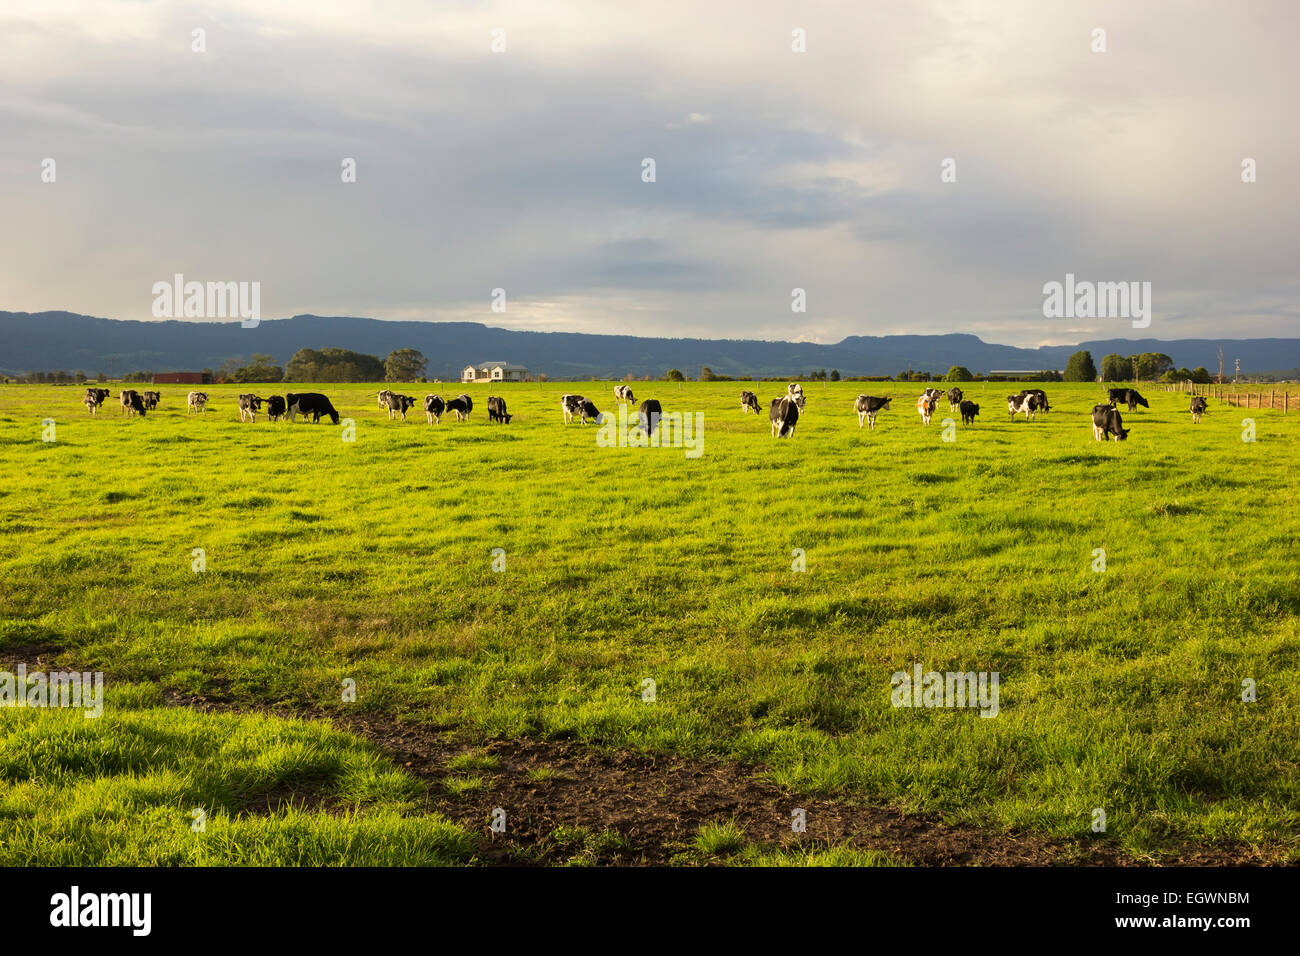 Cattle grazing in the open meadows in Australia Stock Photo